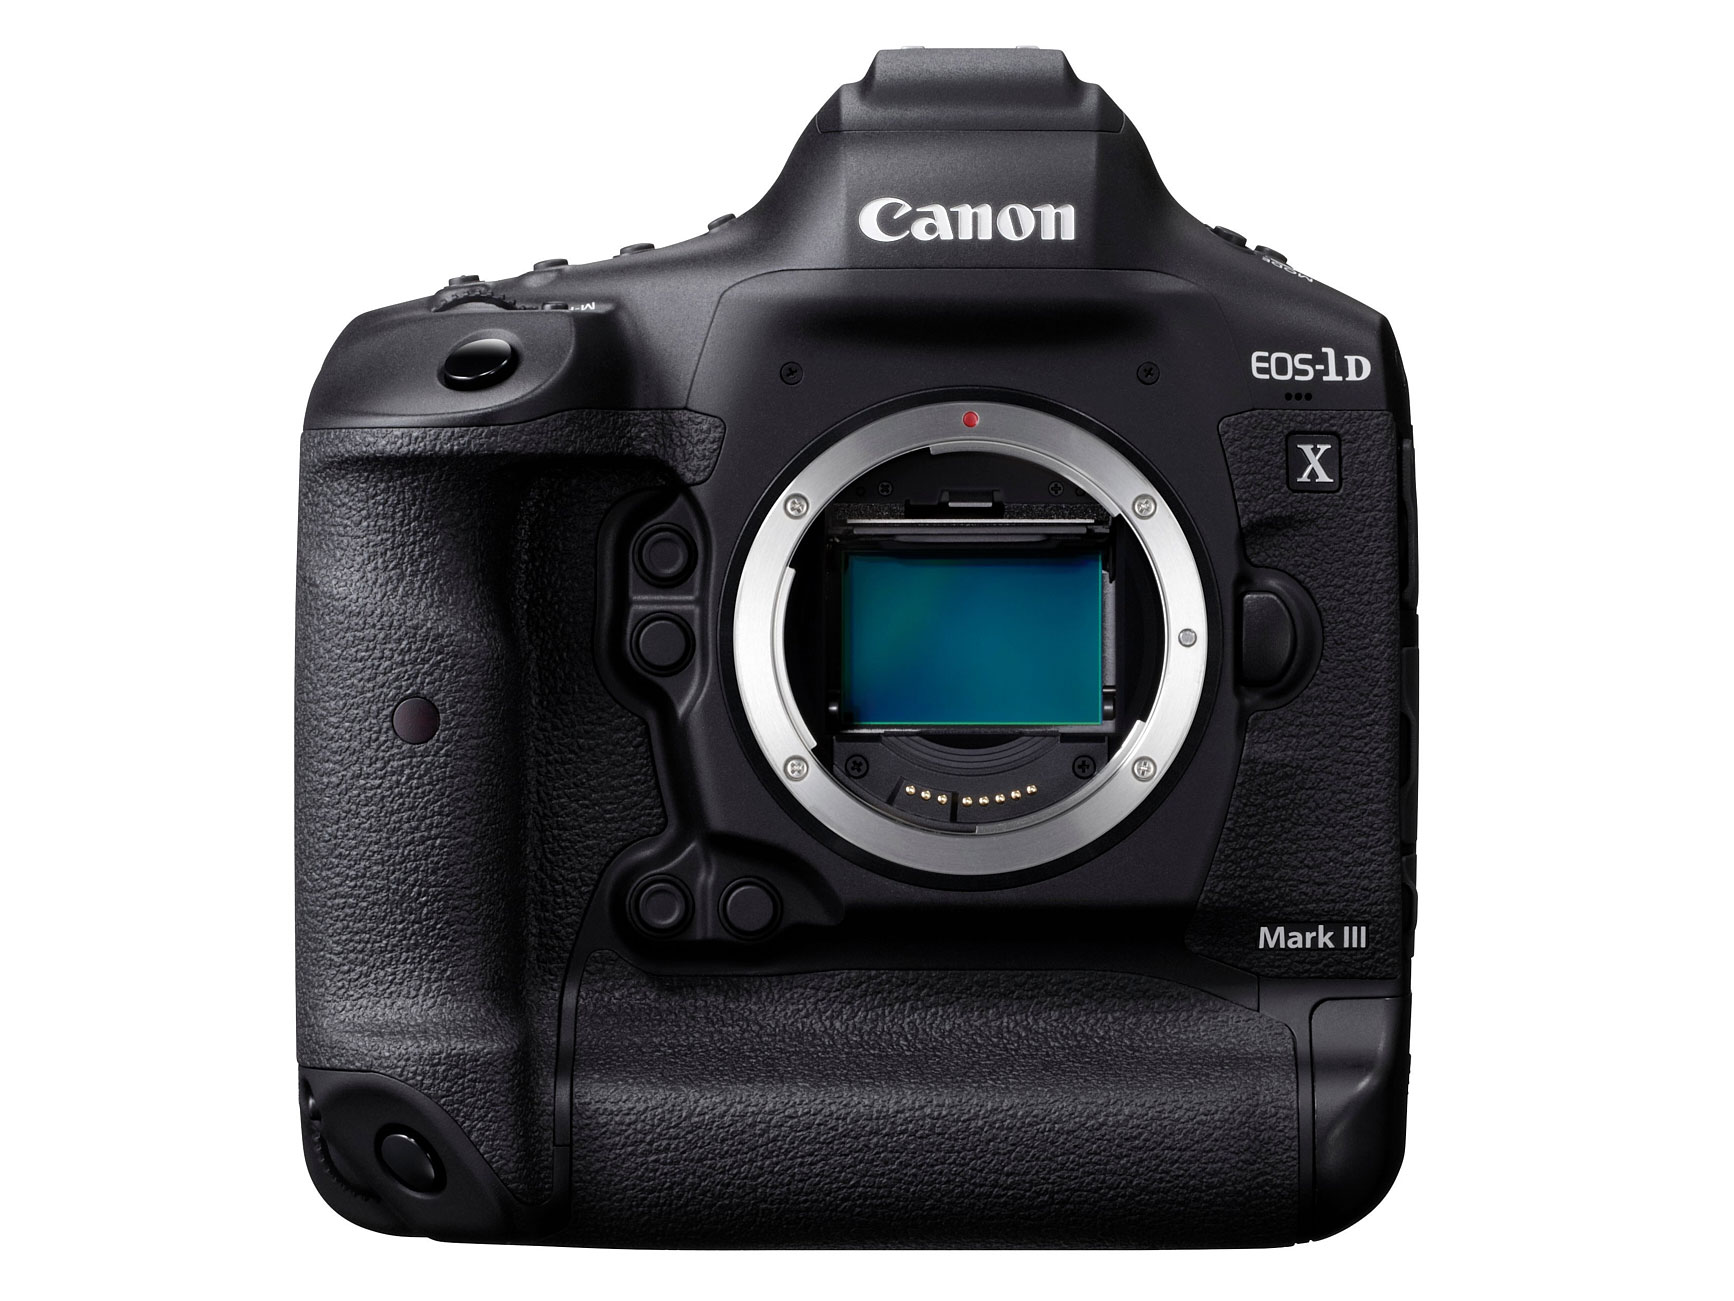 Canon EOS R8 Sensor test - DXOMARK